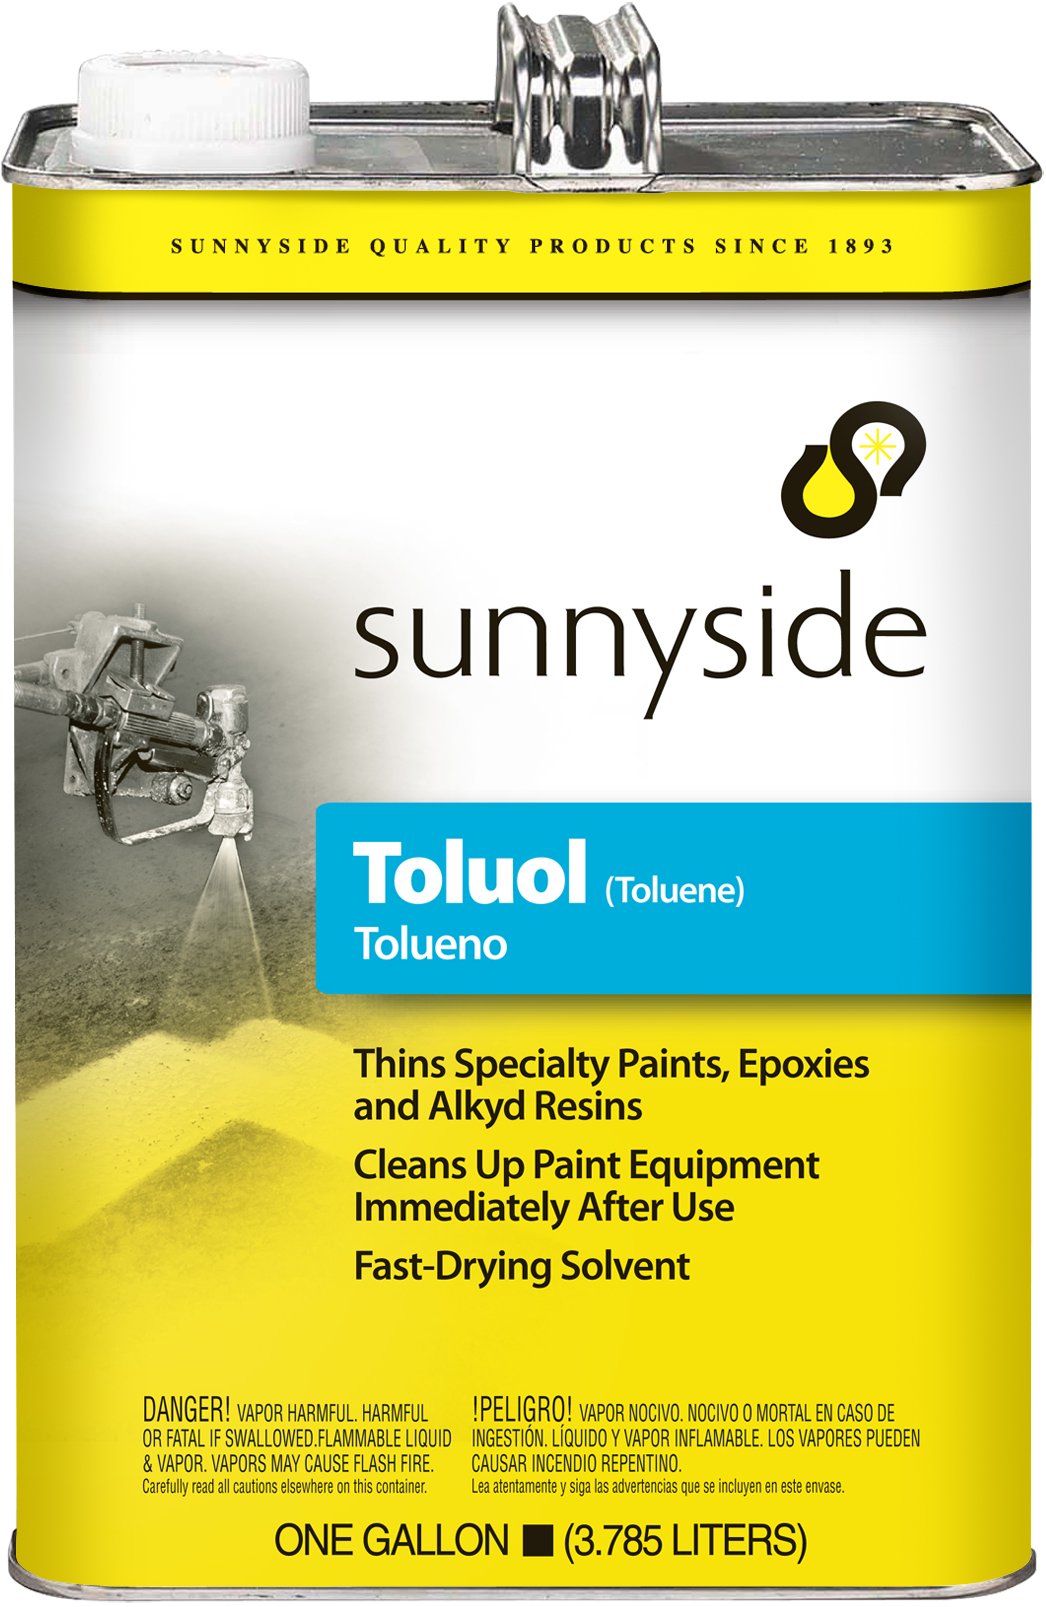 TOLUOL Product Image